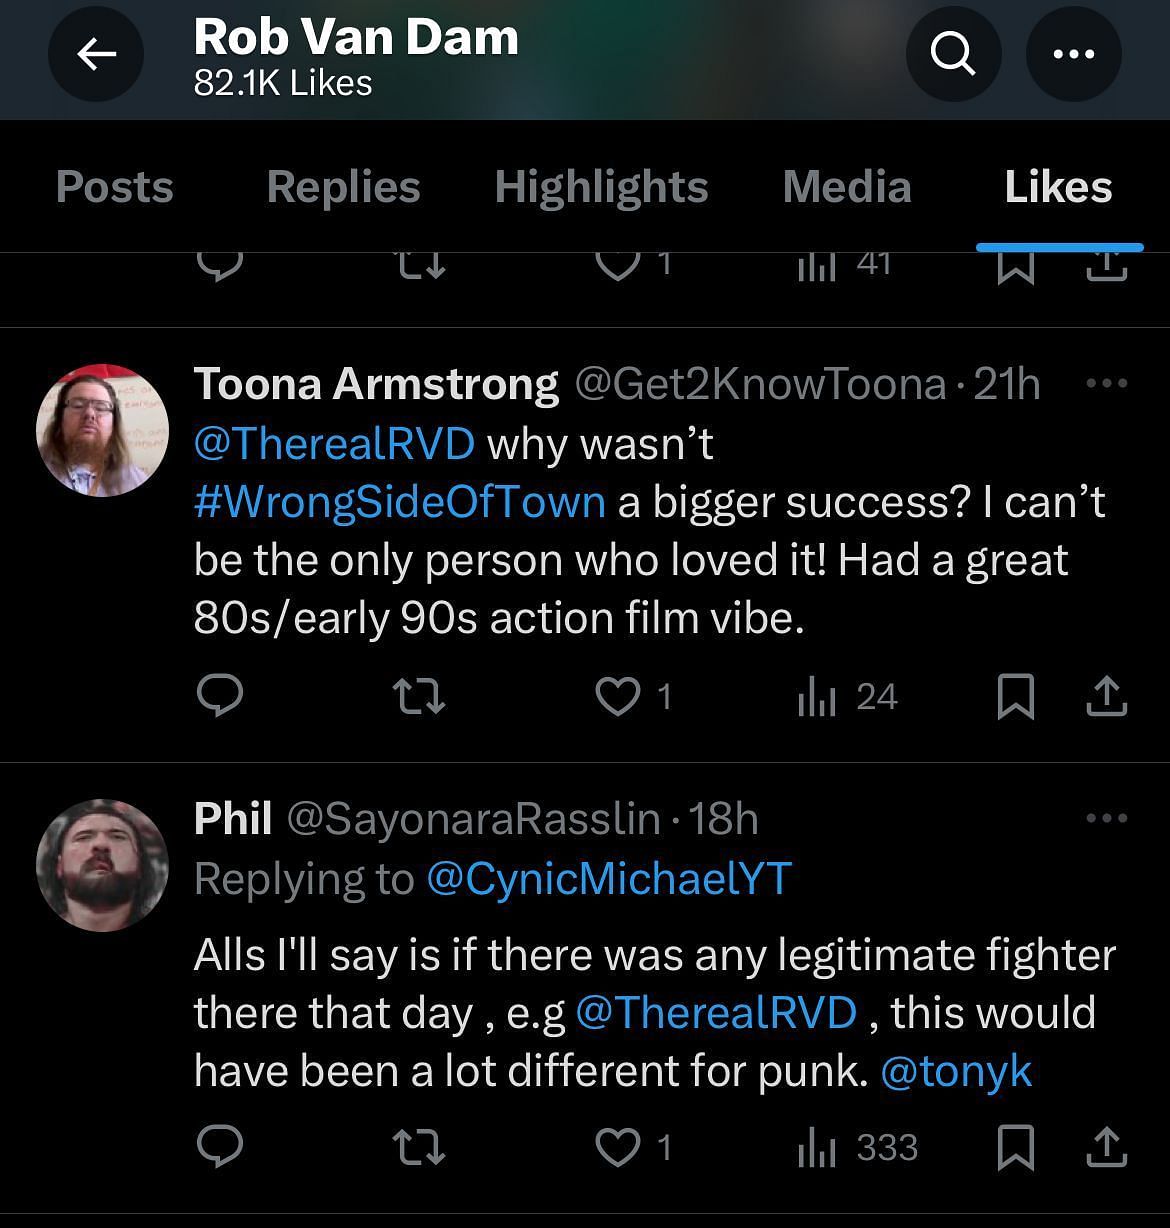 Rob Van Dam liked the tweet regarding CM Punk&#039;s backstage altercation